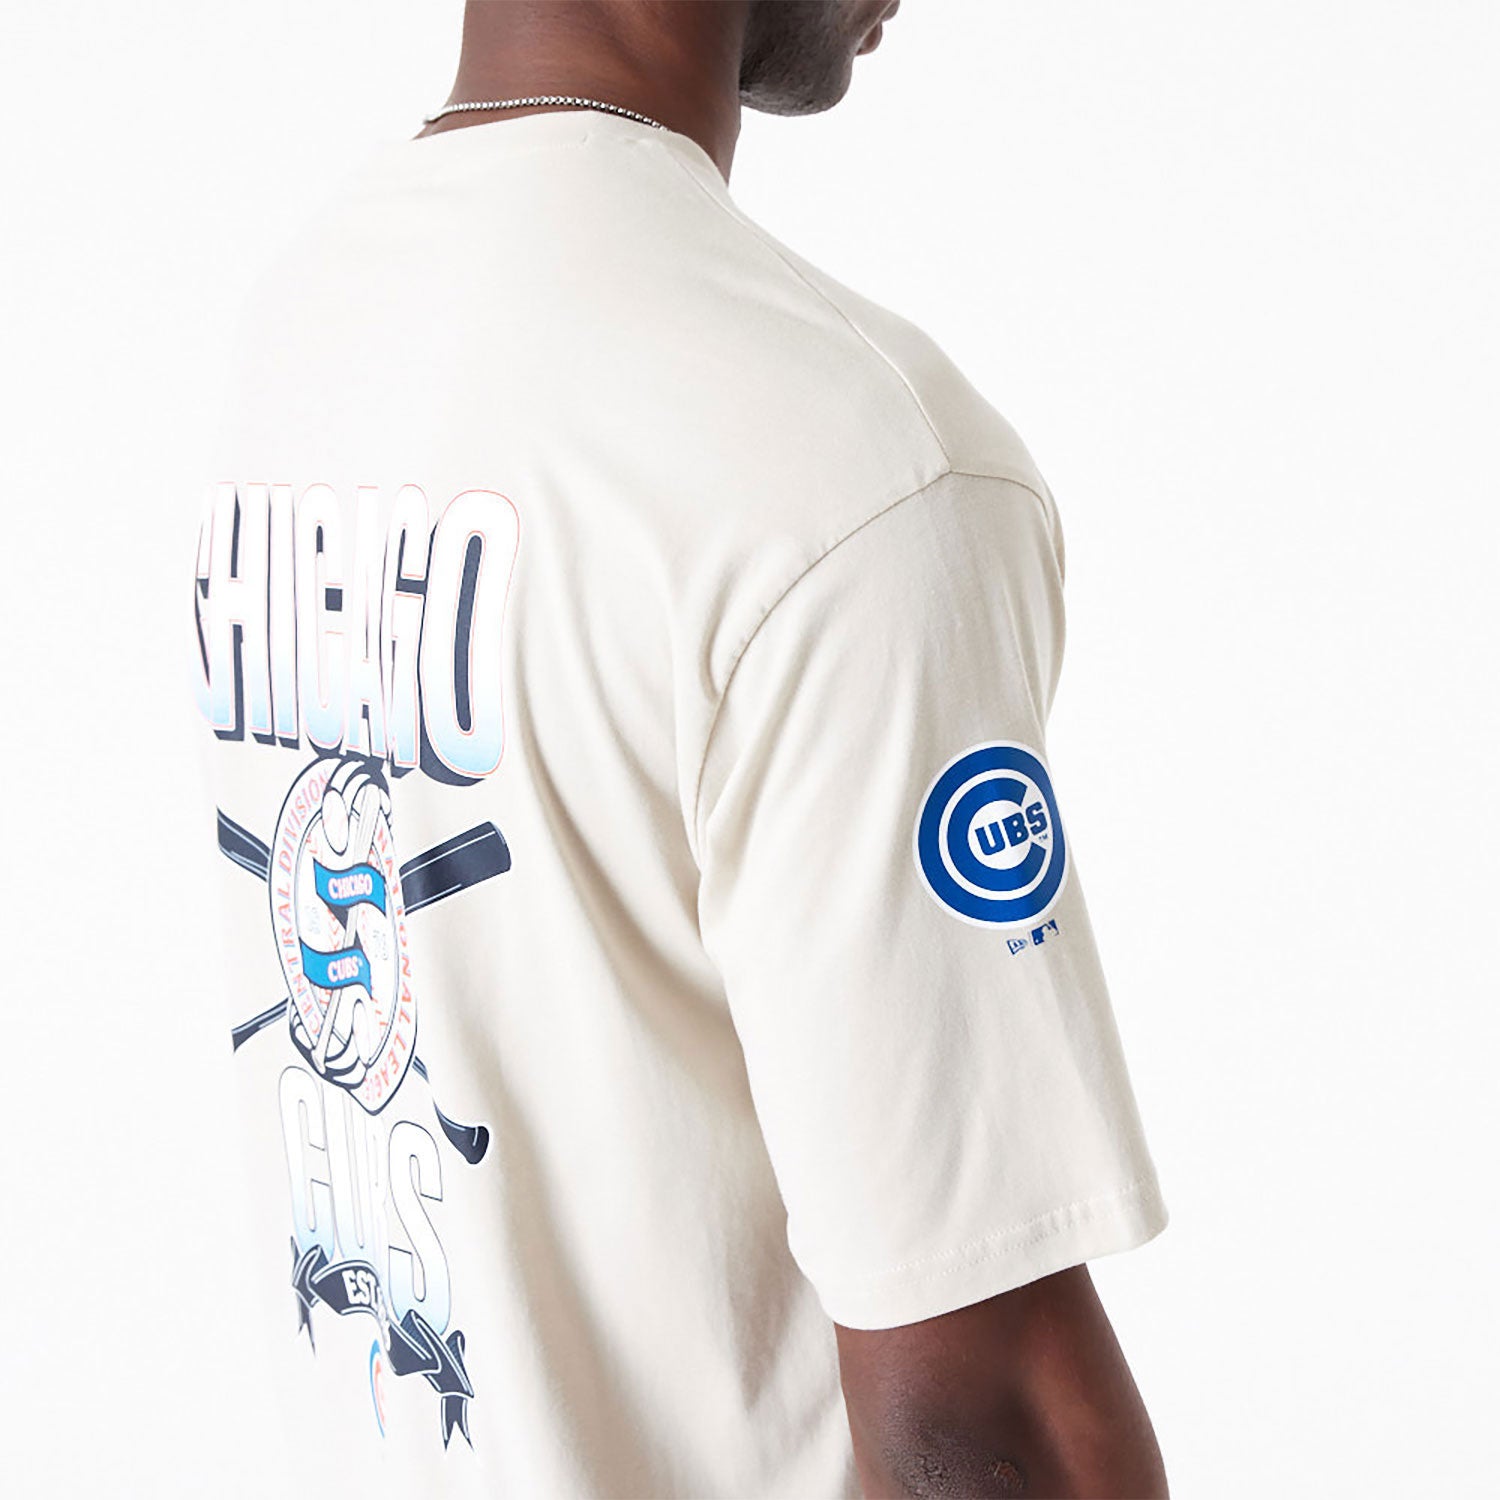 New Era - Baseball Graphic OS T-Shirt - Chicago Cubs - Stone/White - Headz Up 